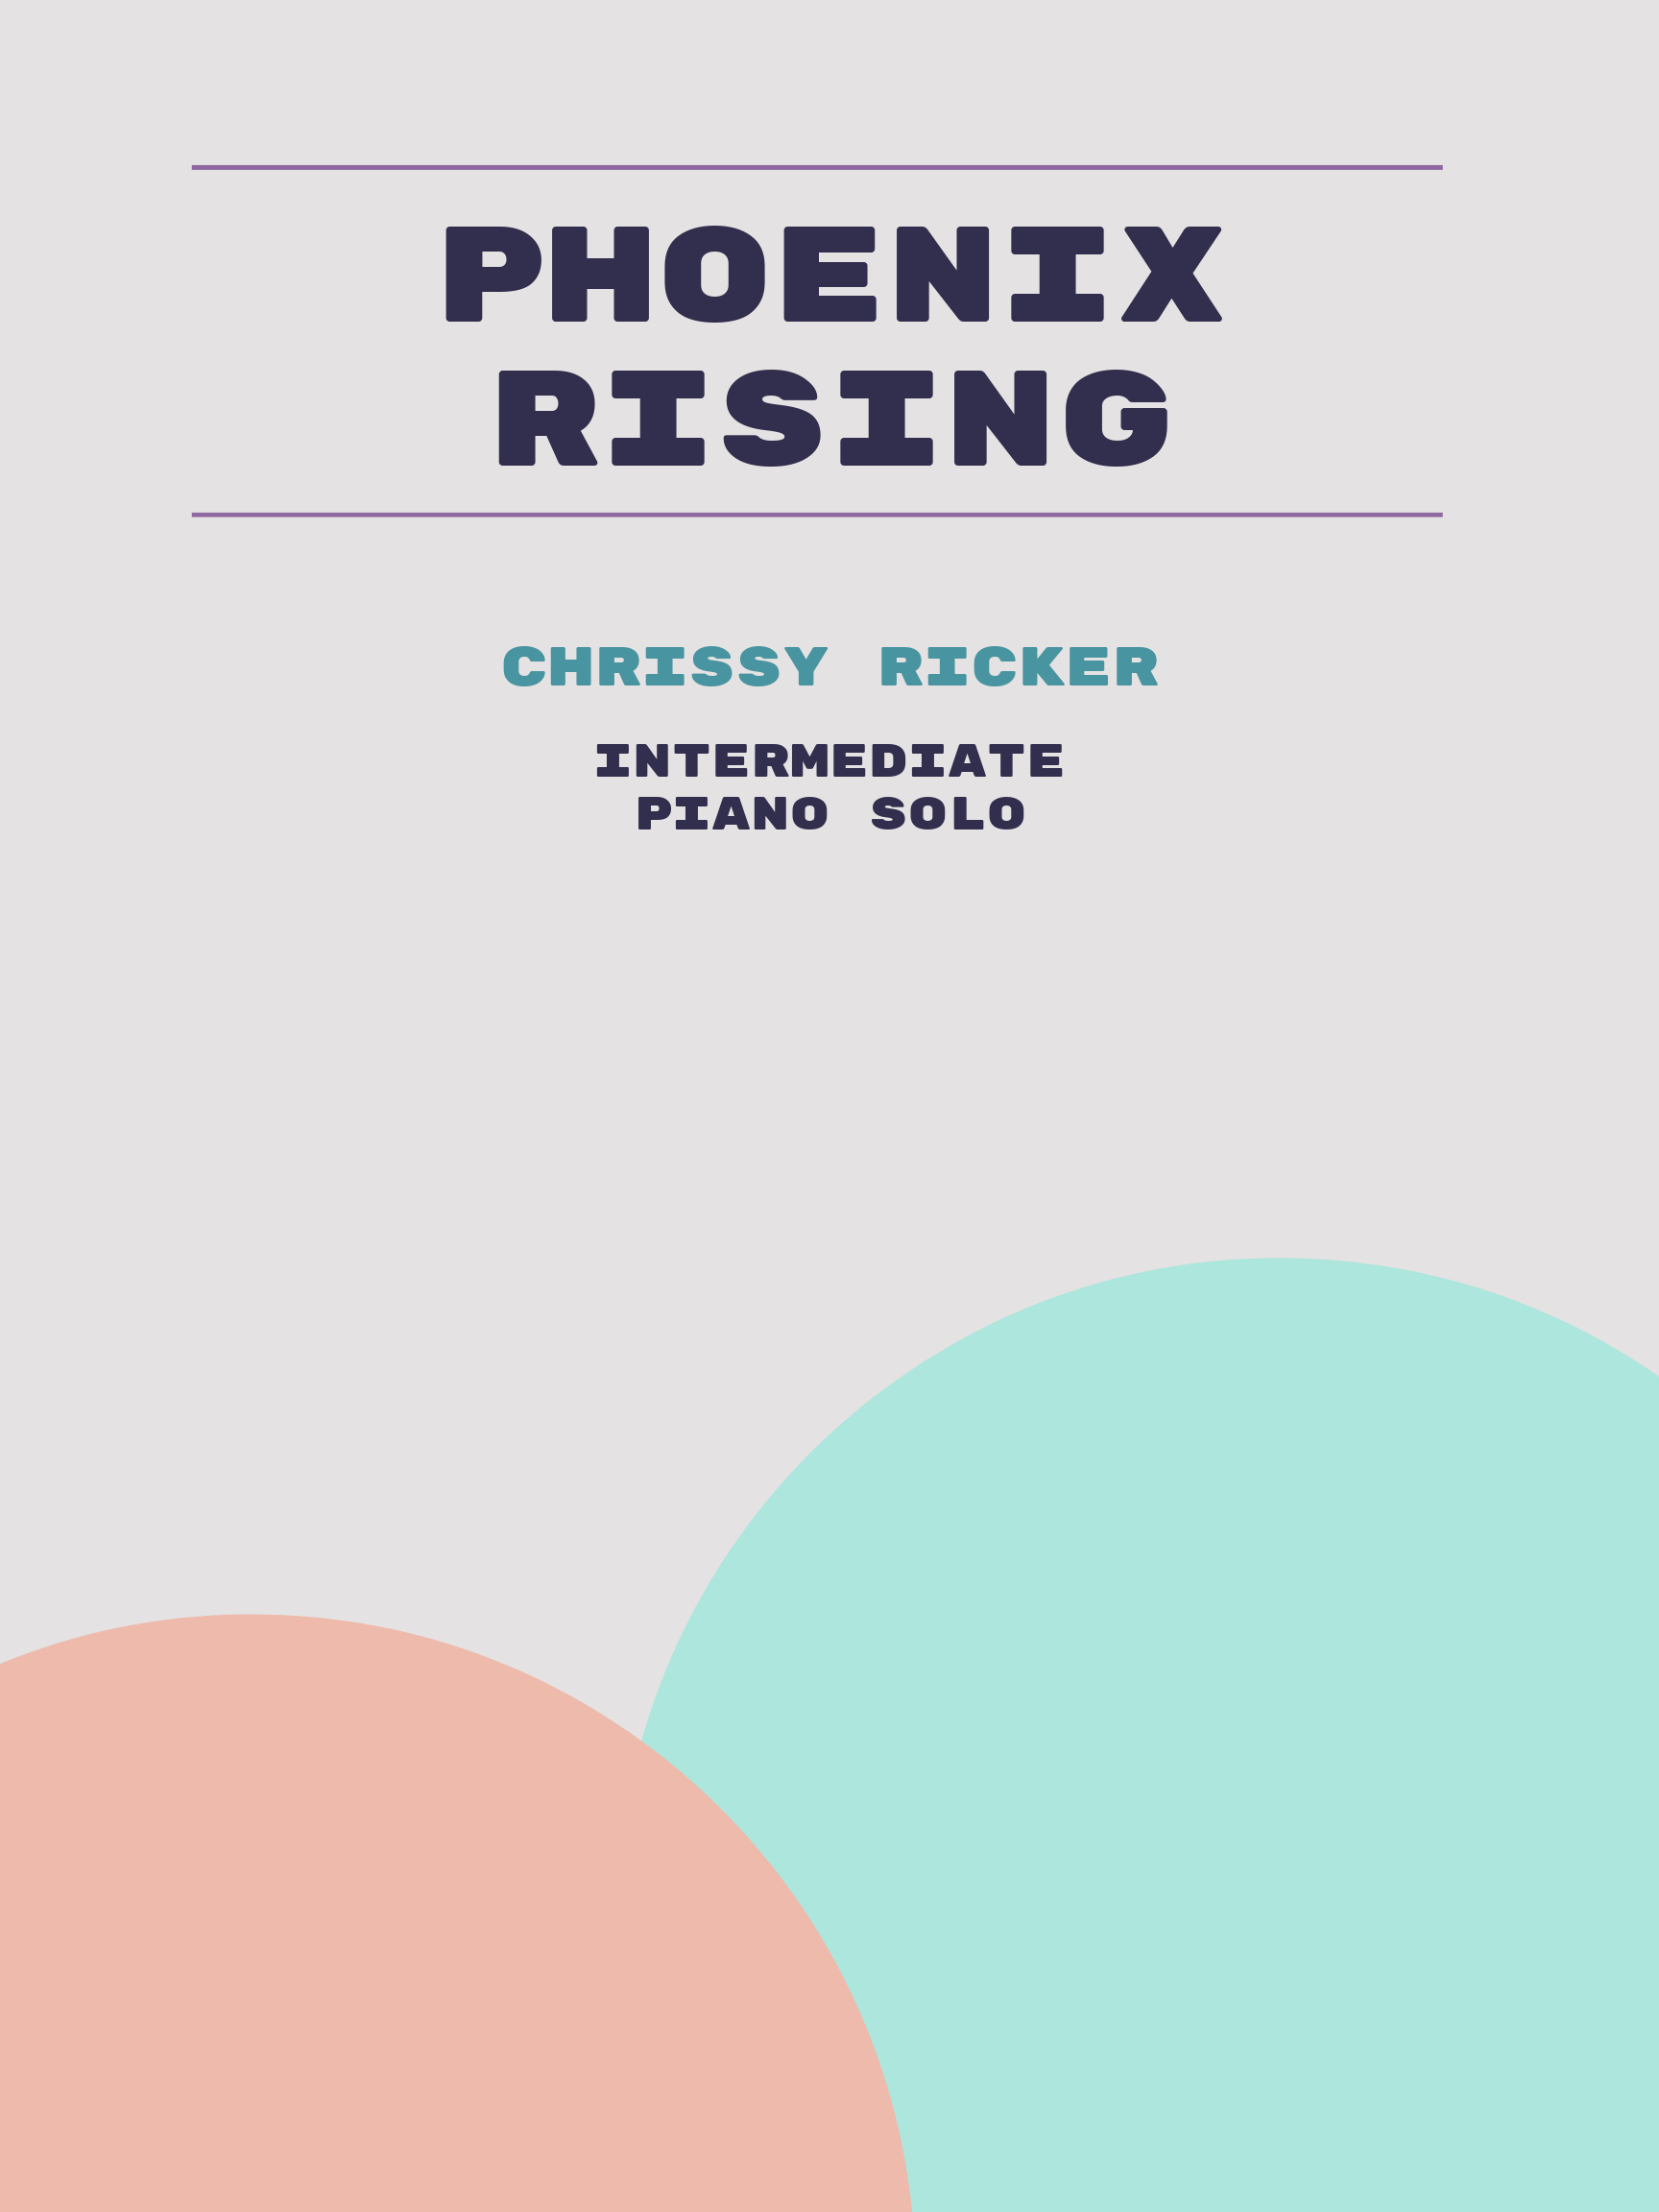 Phoenix Rising by Chrissy Ricker